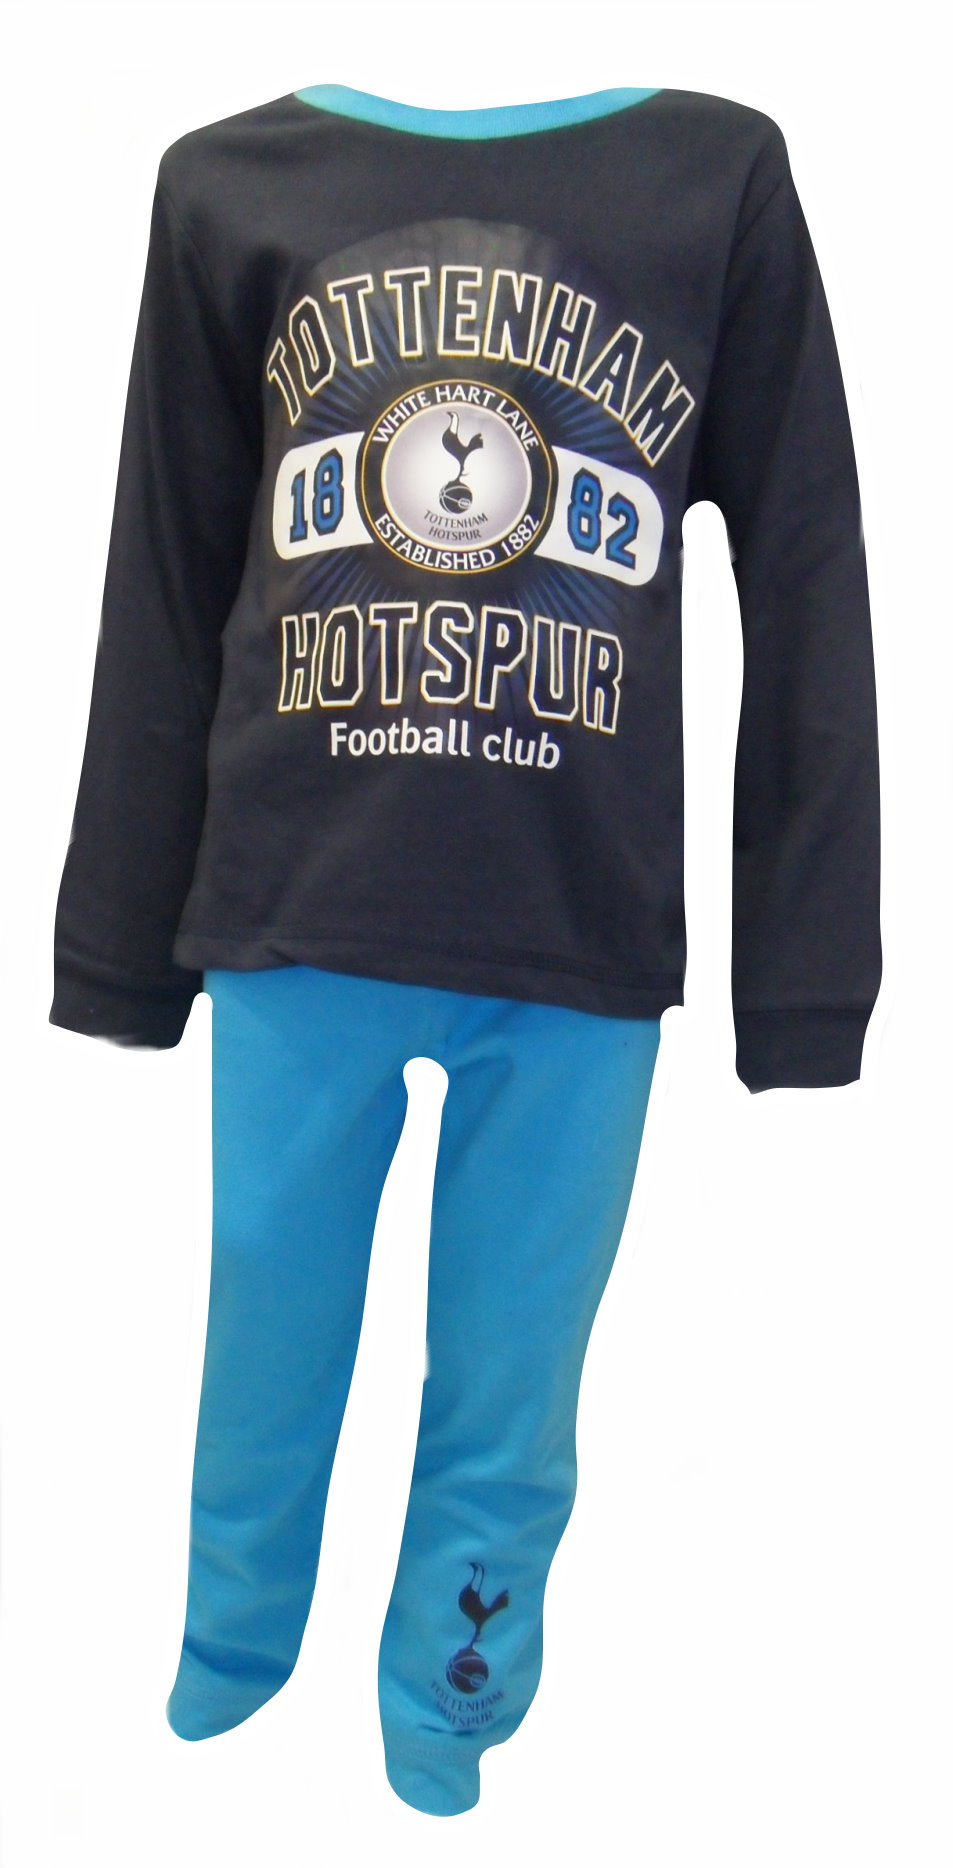 Tottenham Hotspur Pyjamas SPURS_2015.JPG  by Thingimijigs